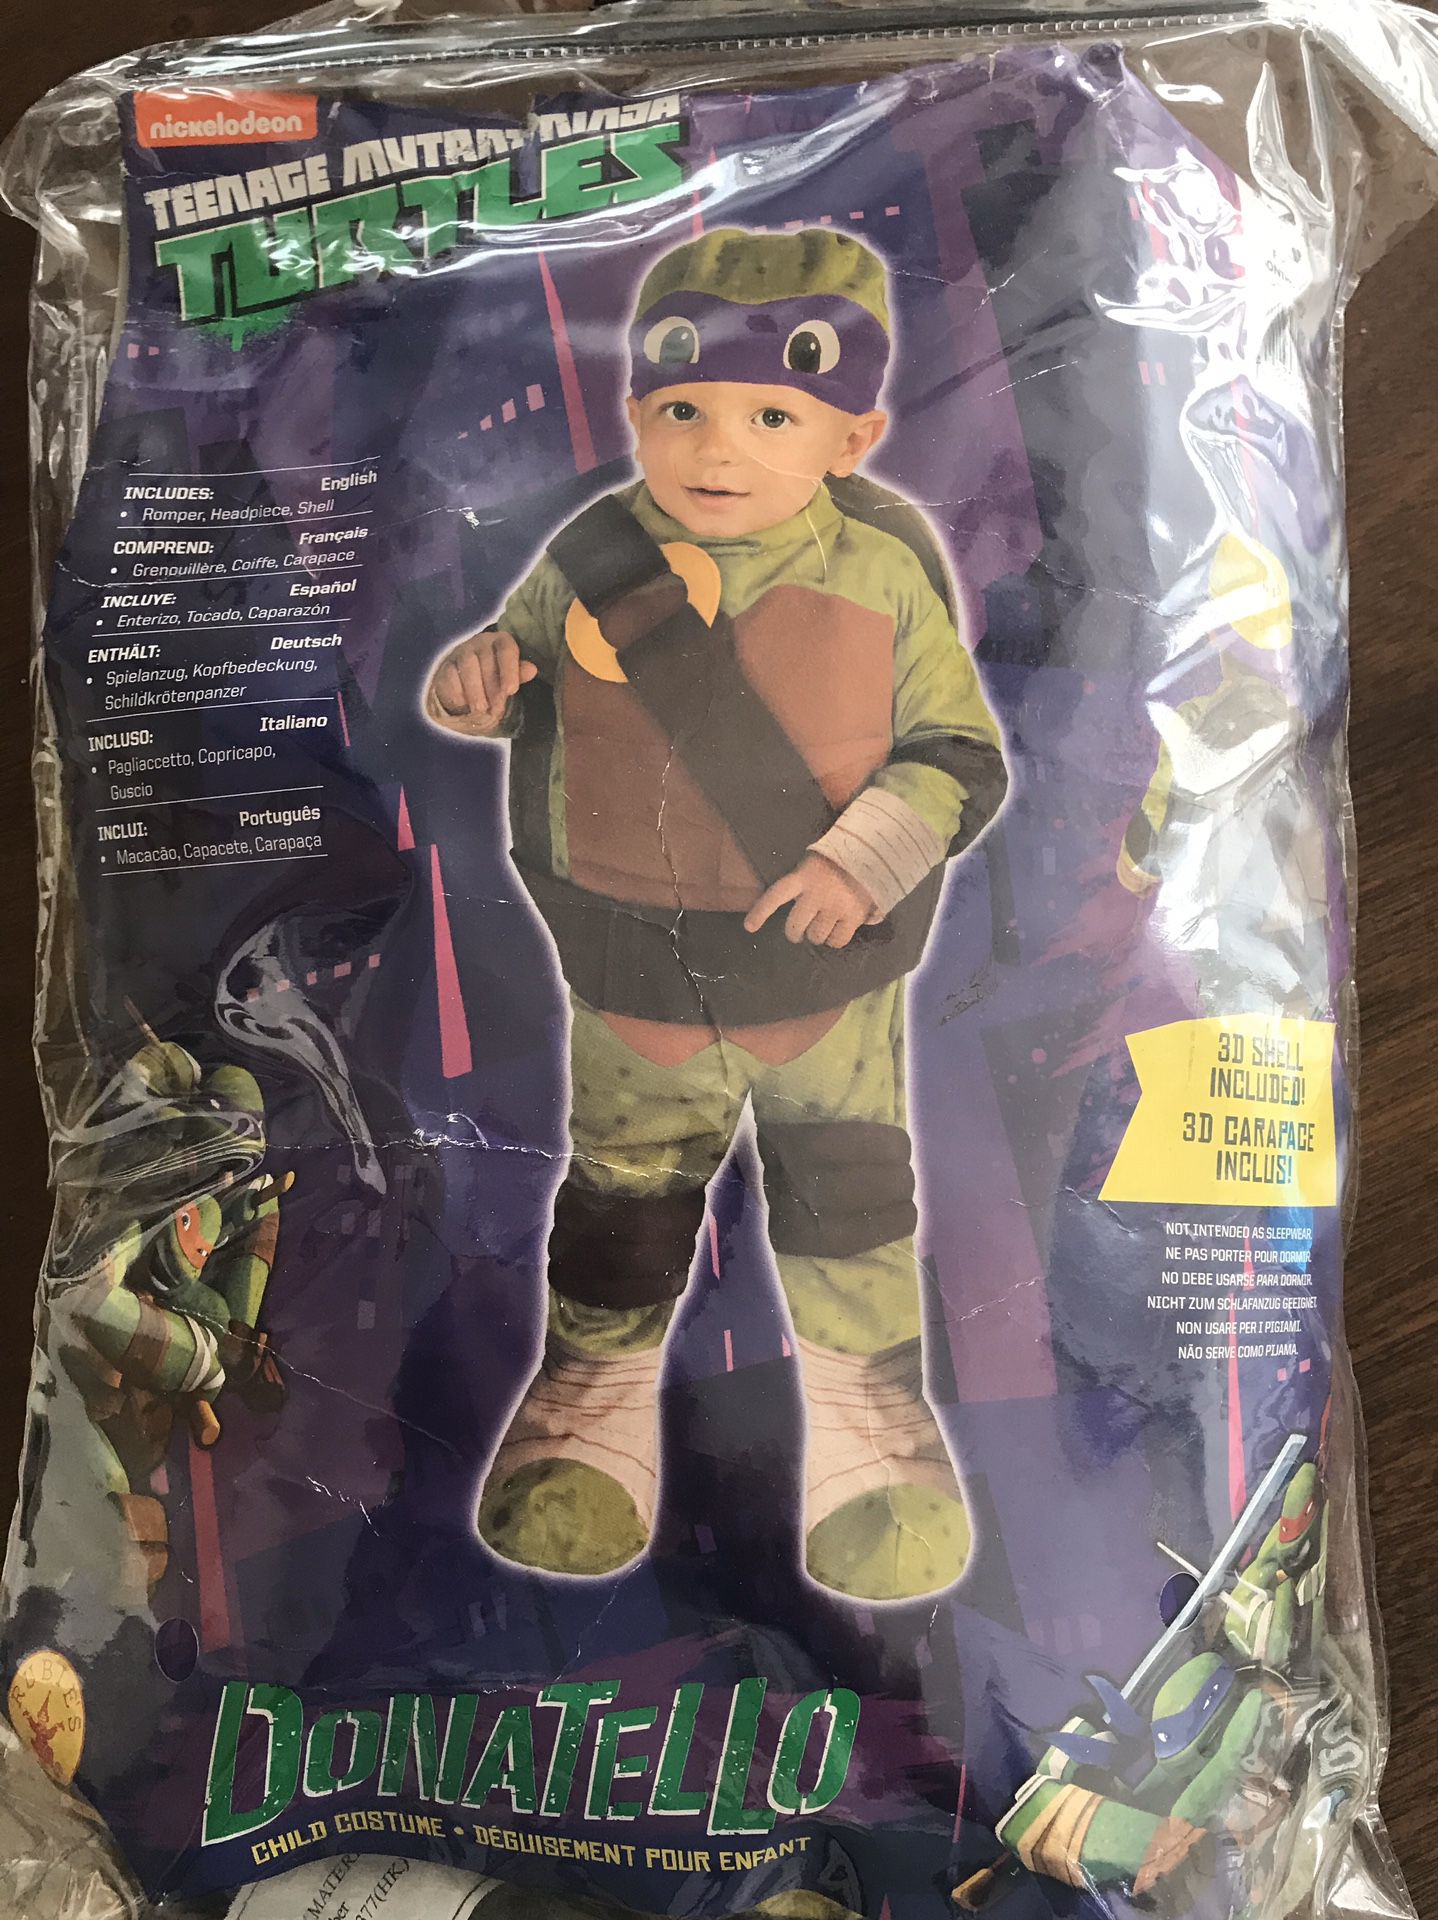 Ninja Turtles Halloween costume size 12 months